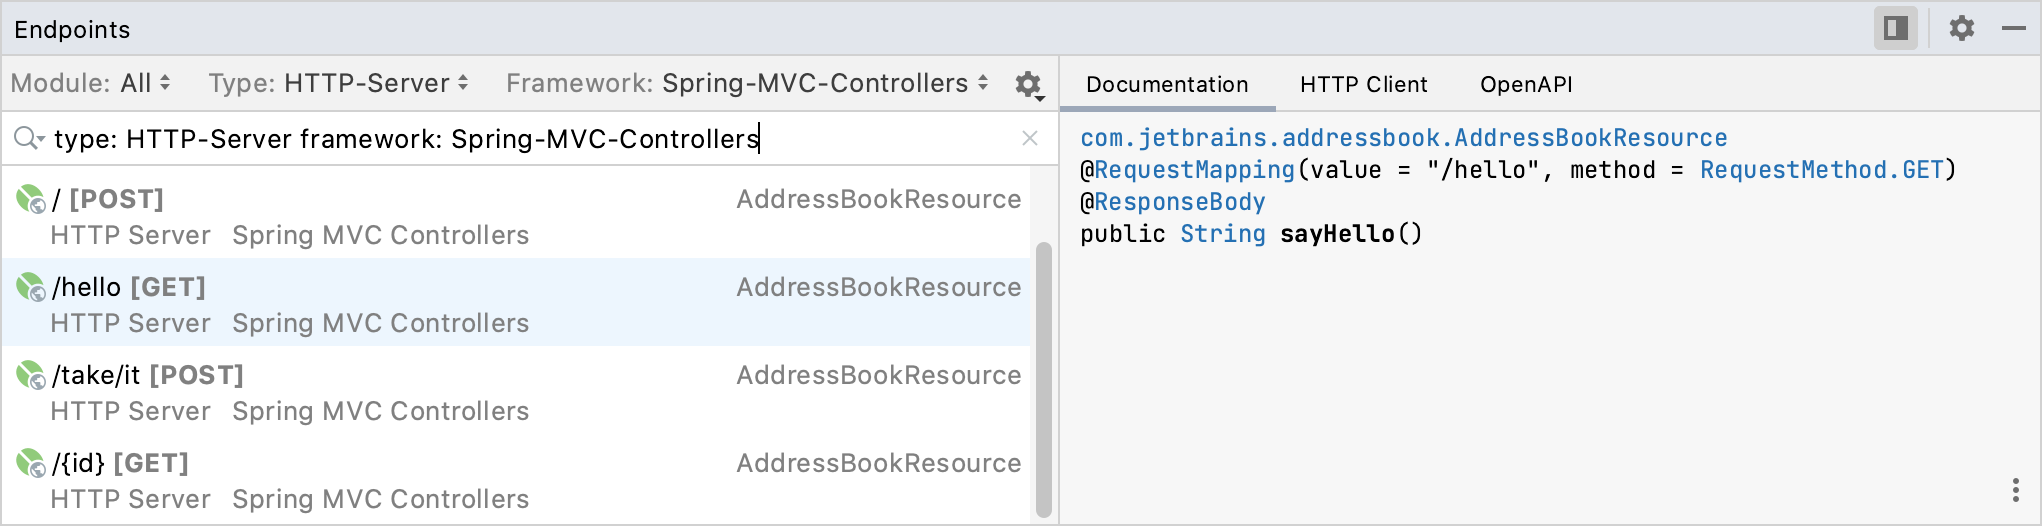 Endpoints tool window: Documentation tab